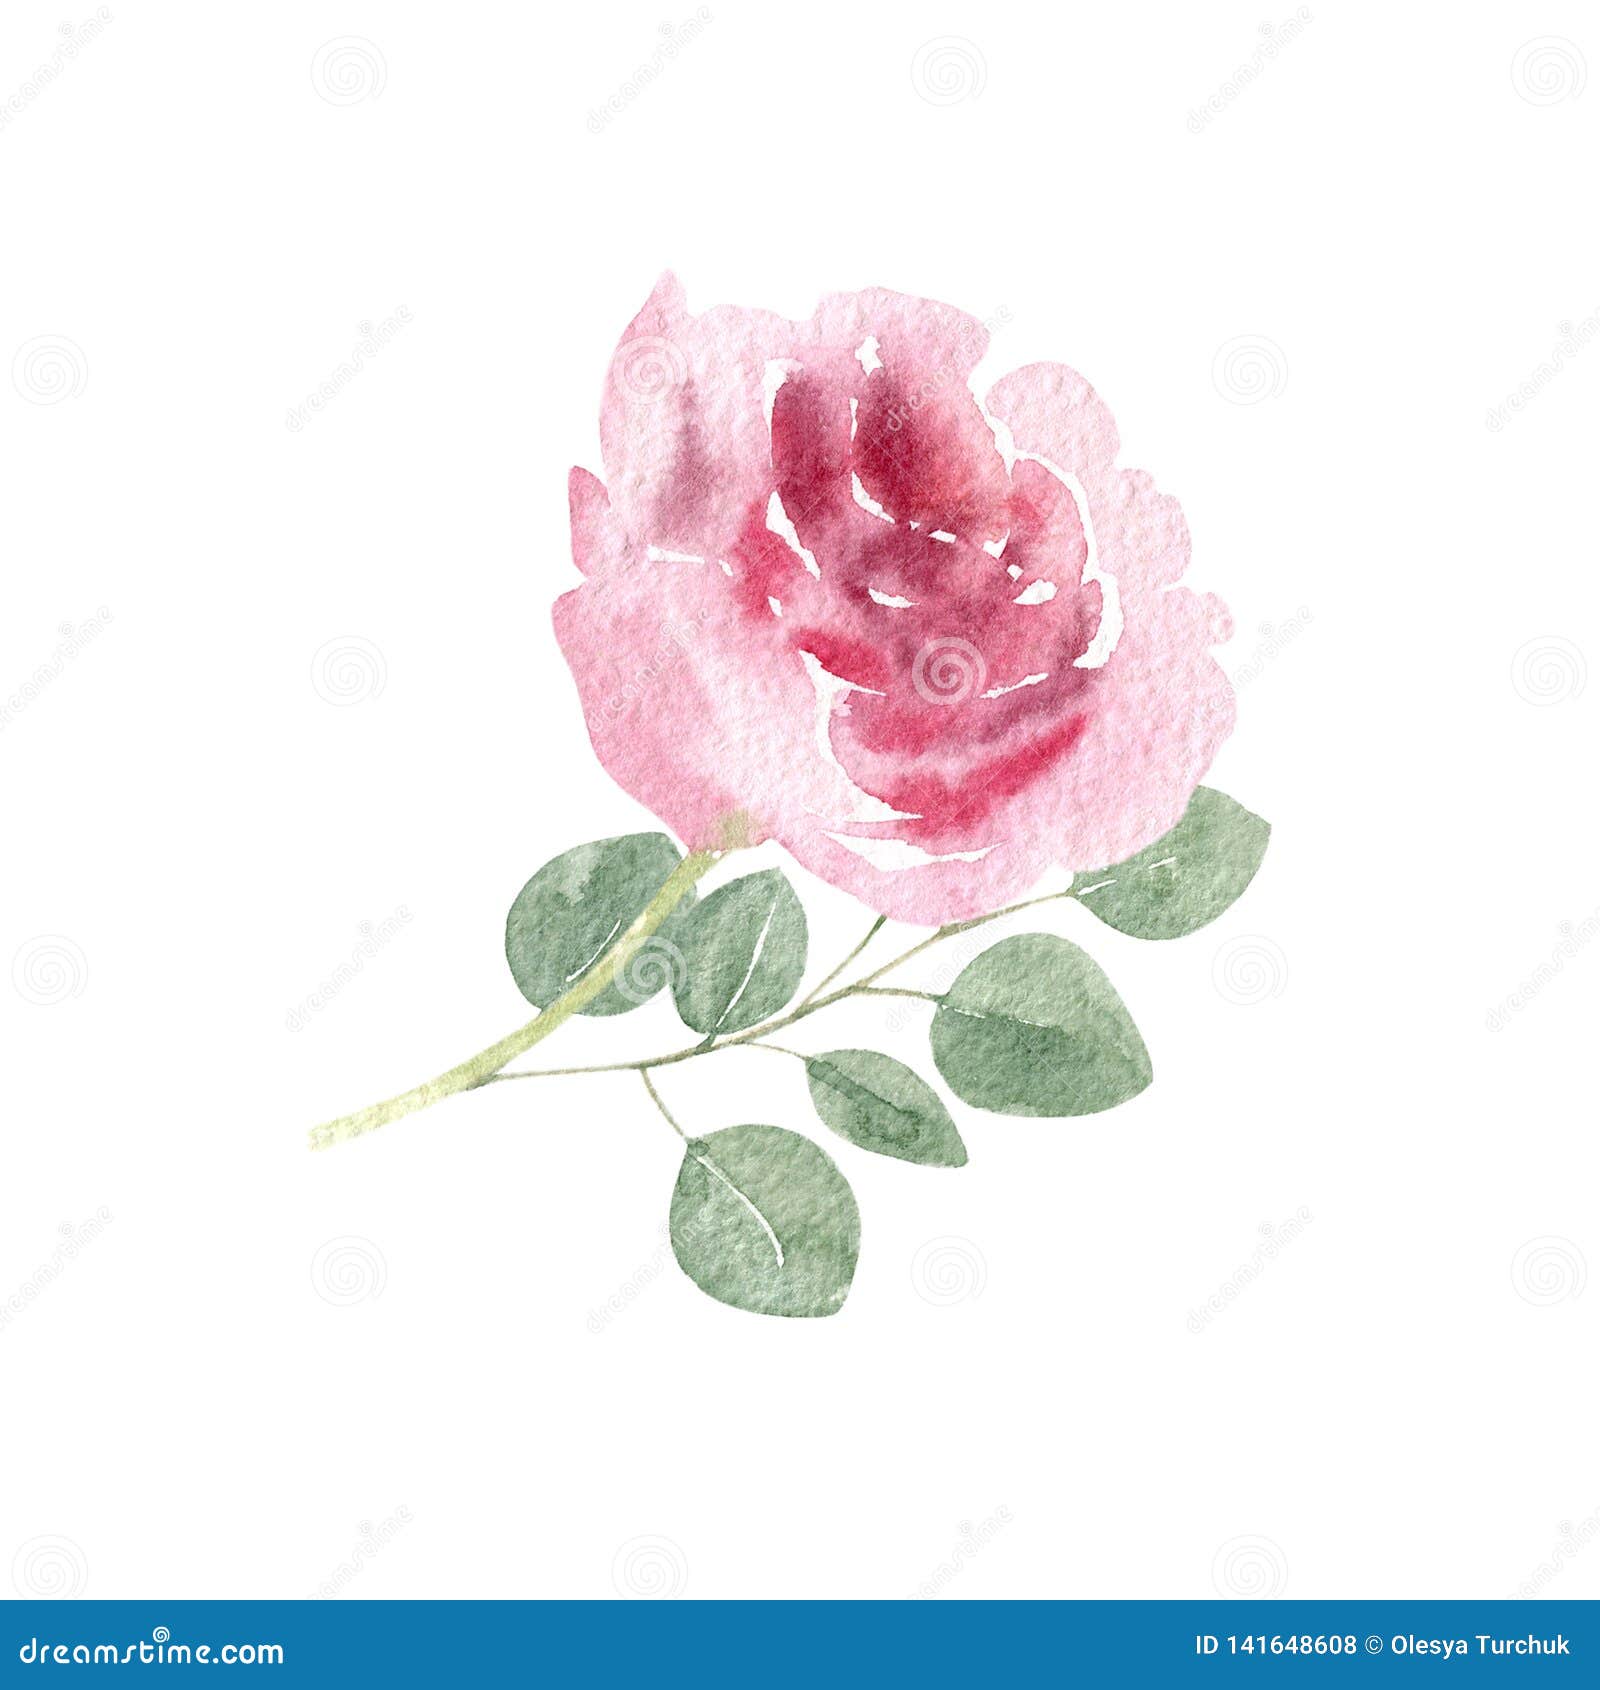 Handpainted Watercolor Rose and Eucalyptus Stock Illustration ...